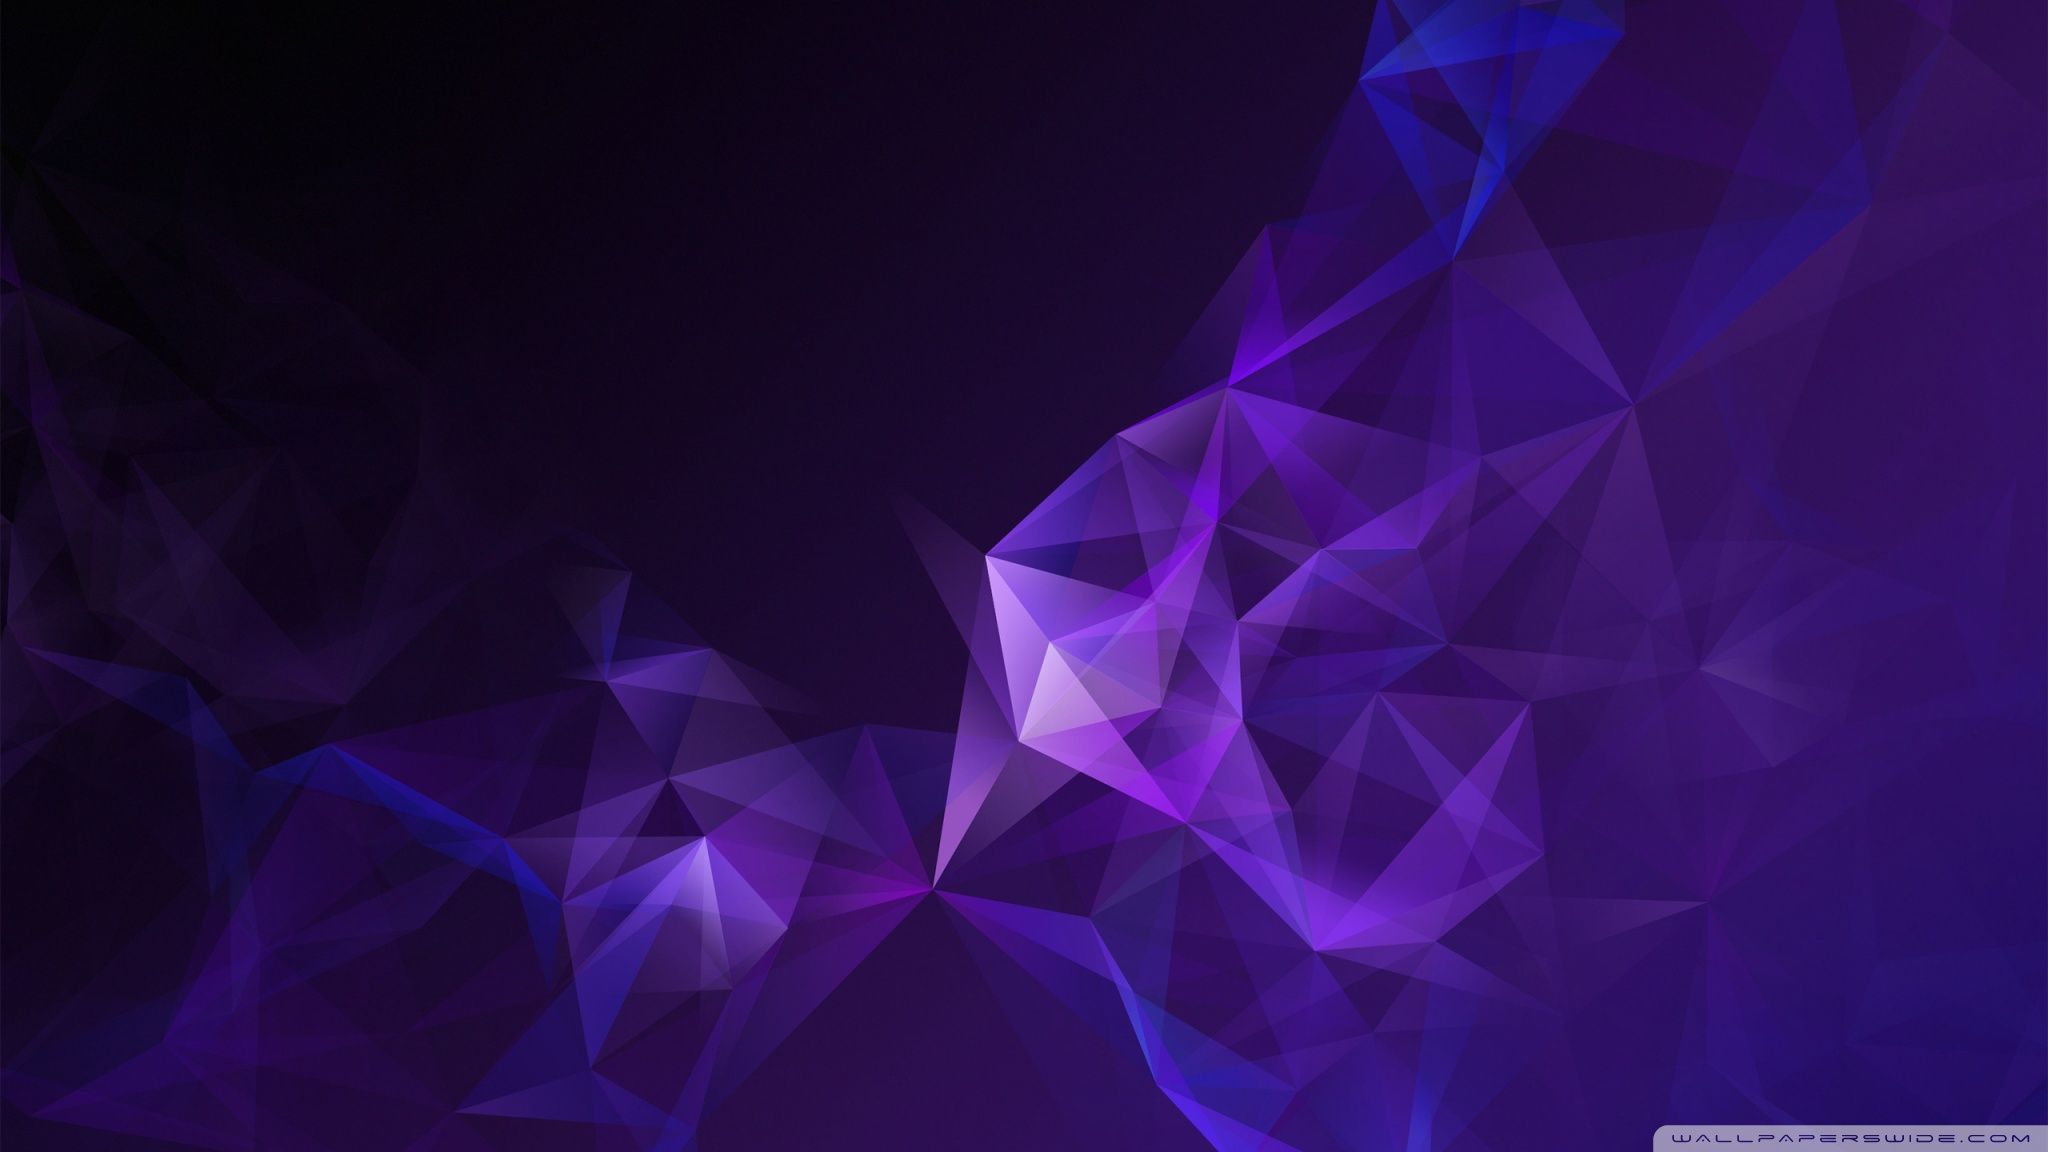 Low Poly Purple Abstract Art Ultra HD Desktop Background Wallpaper for: Widescreen & UltraWide Desktop & Laptop, Multi Display, Dual Monitor, Tablet